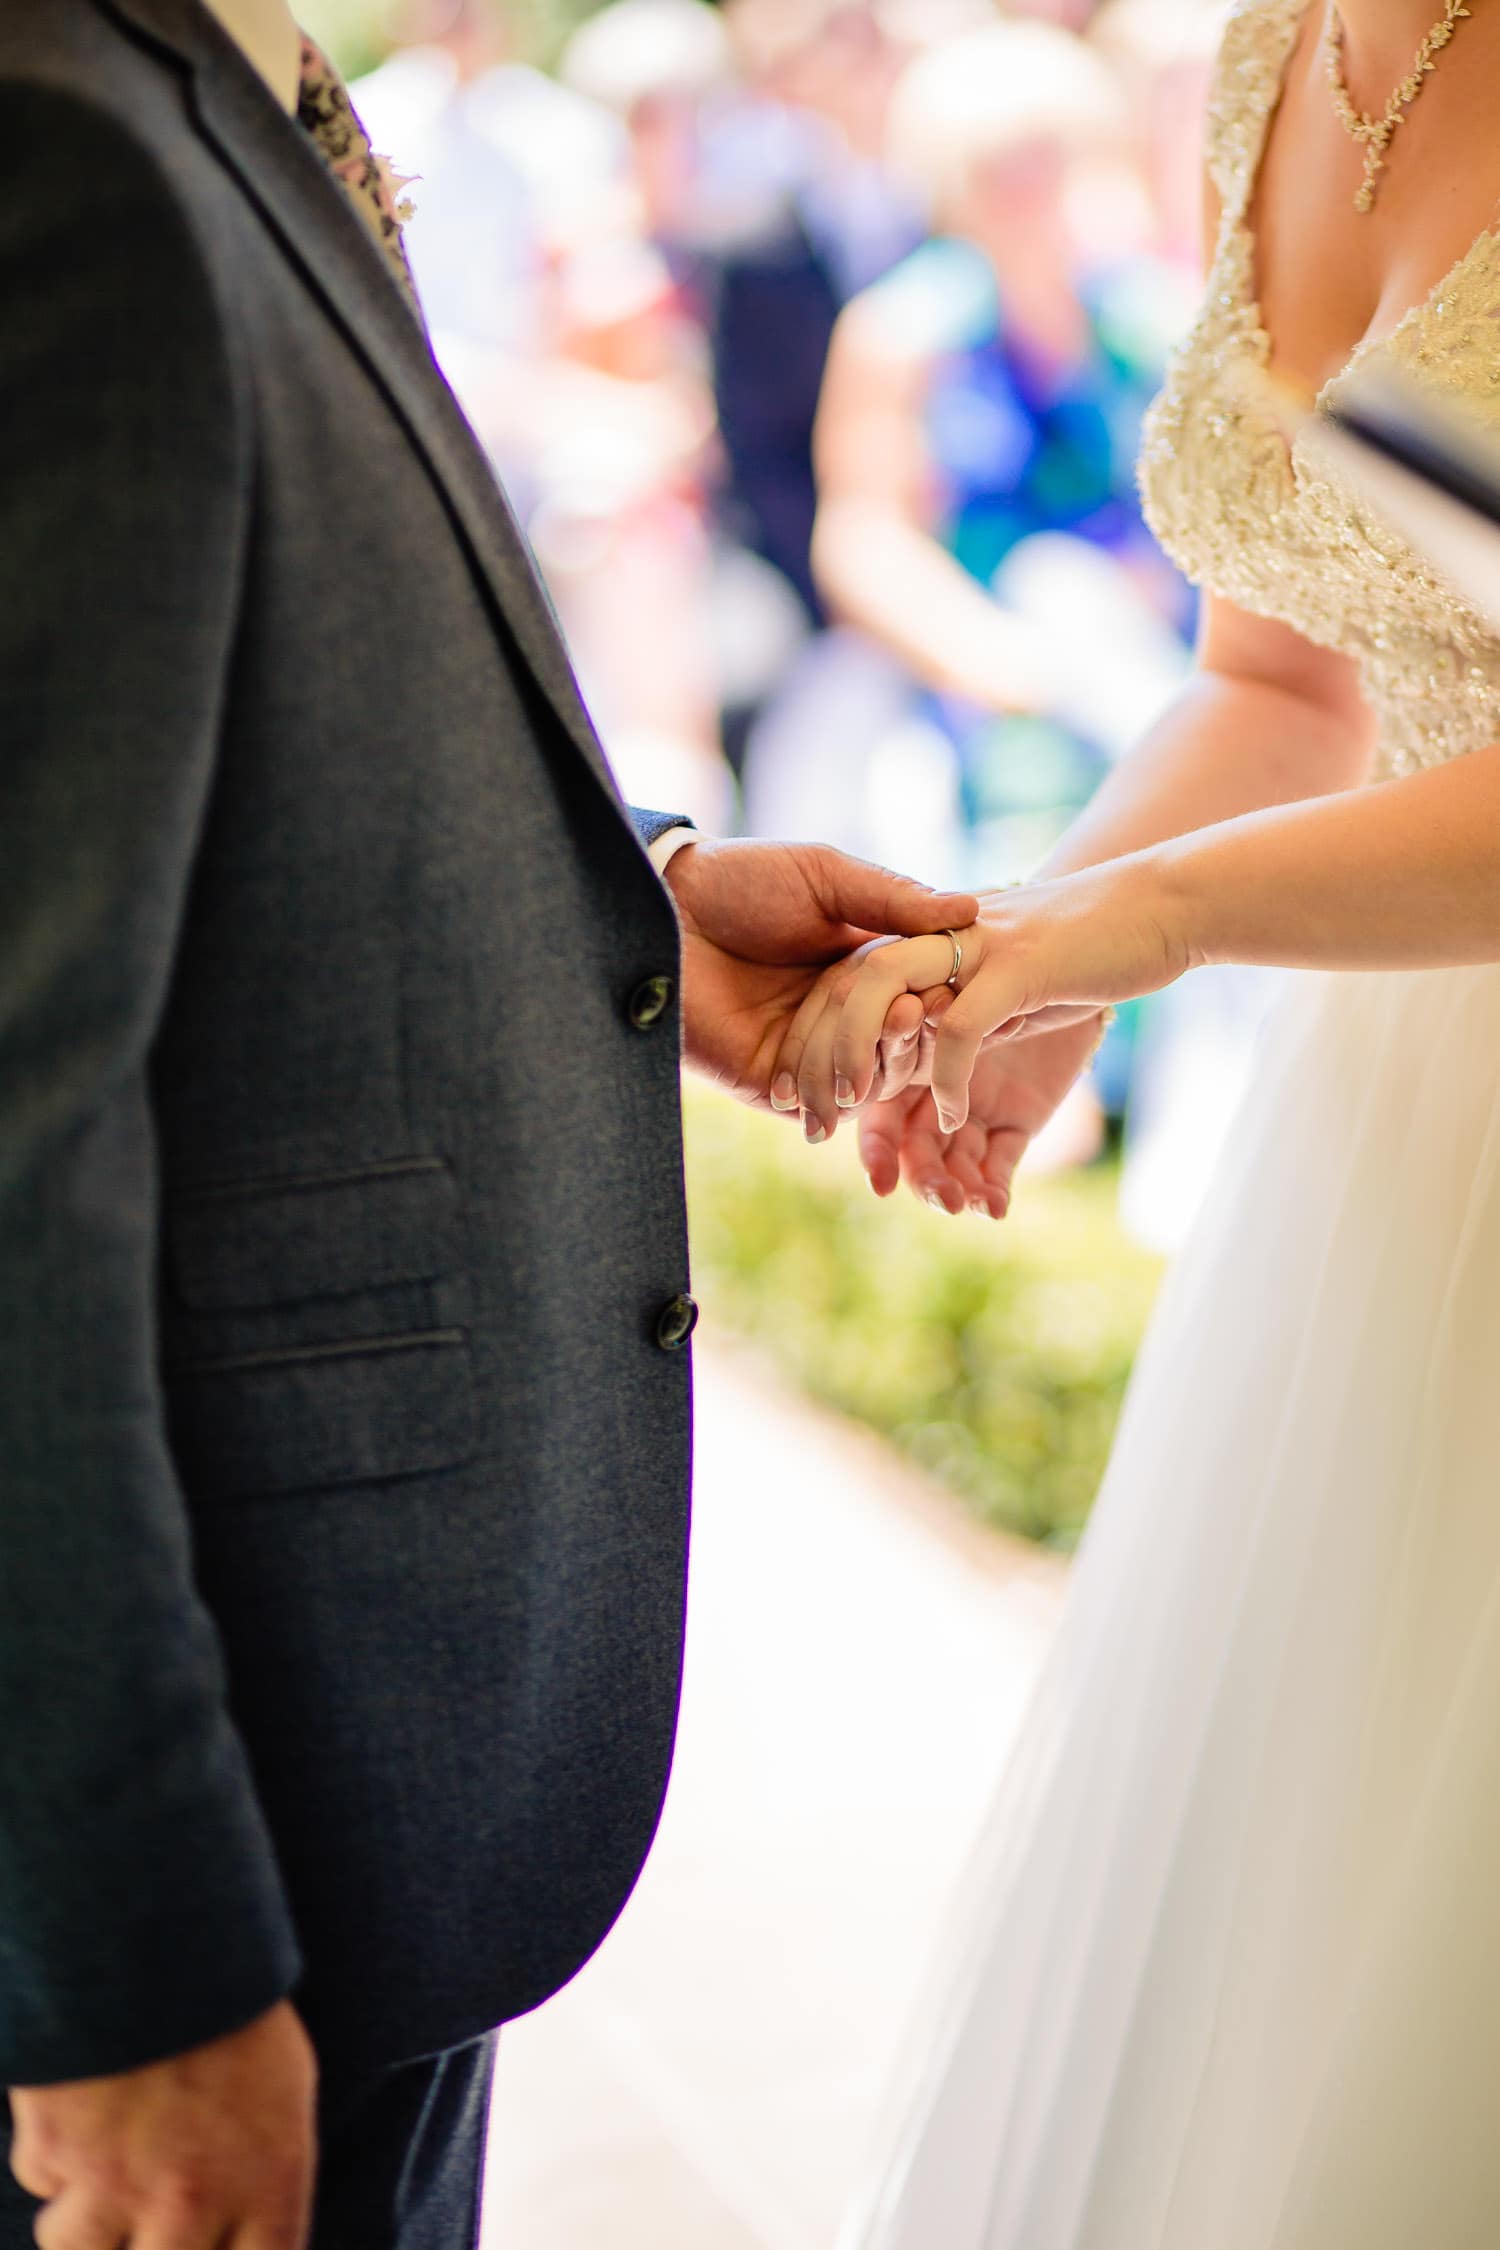 the exchange of wedding rings captured by Warwick House Wedding Photography